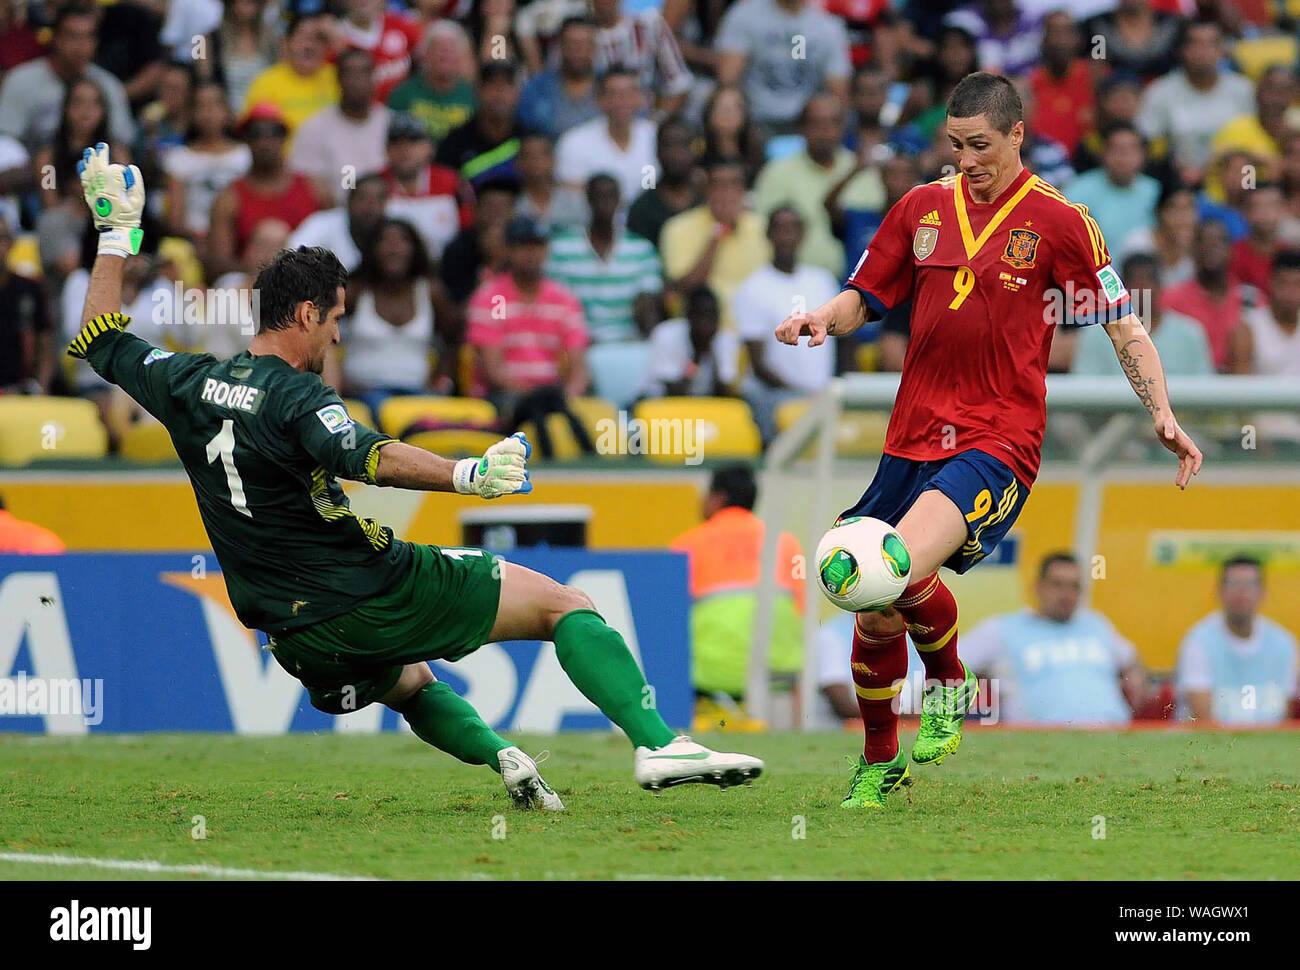 Rio de Janeiro, Brazil, June 20, 2013. Spanish soccer player Fernando Torres kicks the ball to score his goal in the match Spain vs Tahiti in the fina Stock Photo